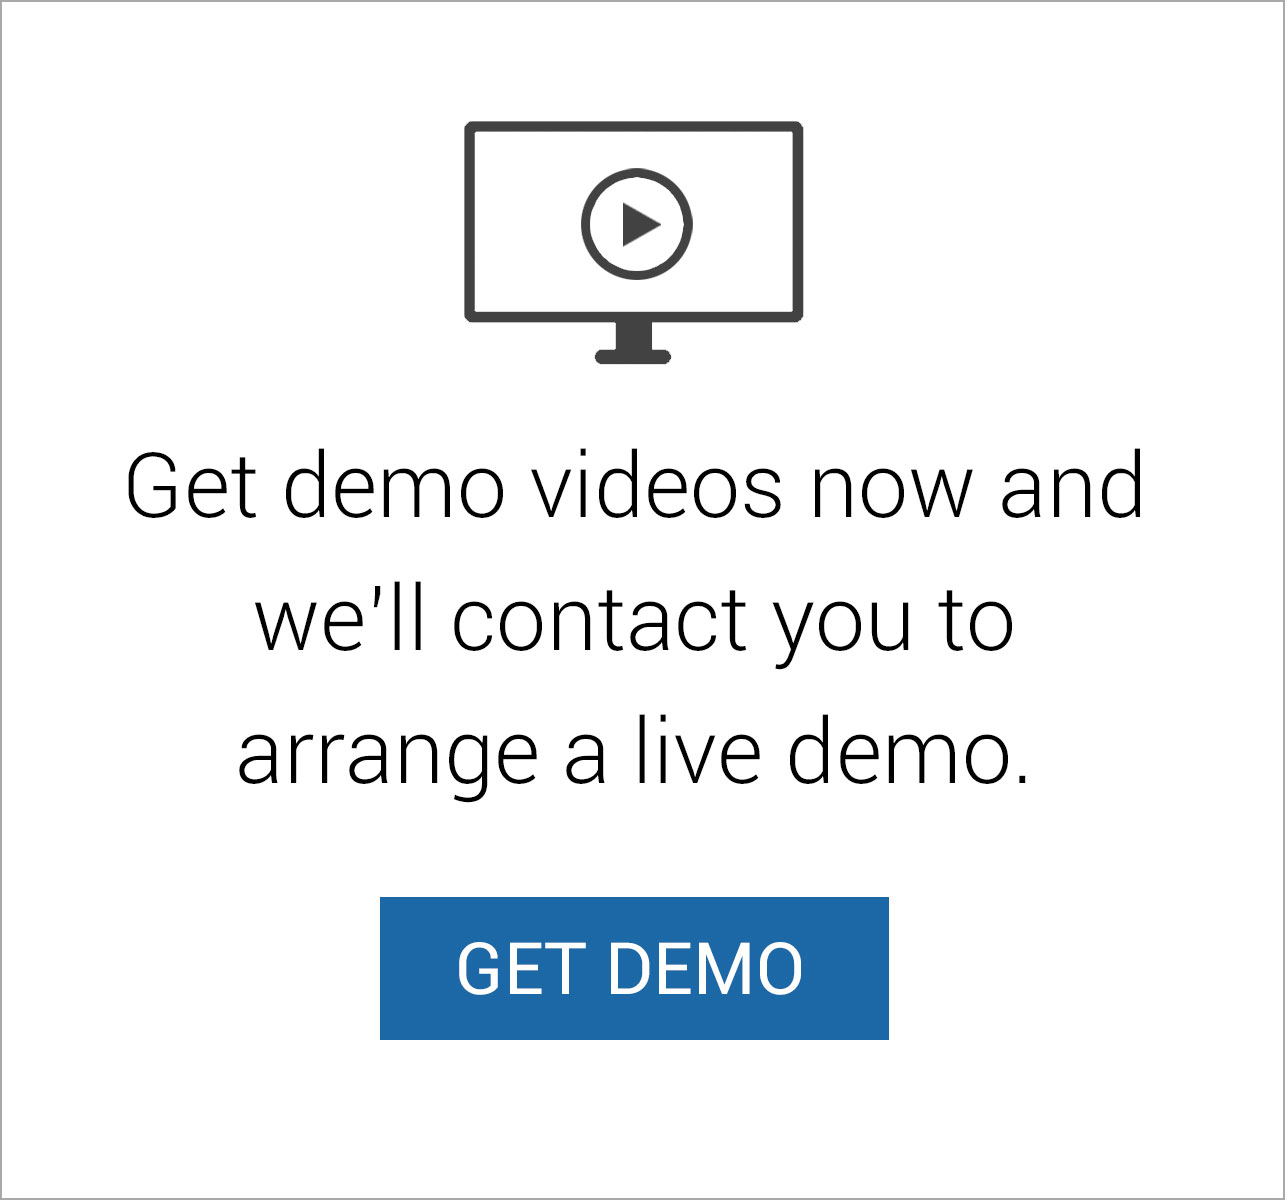 Get demo videos now